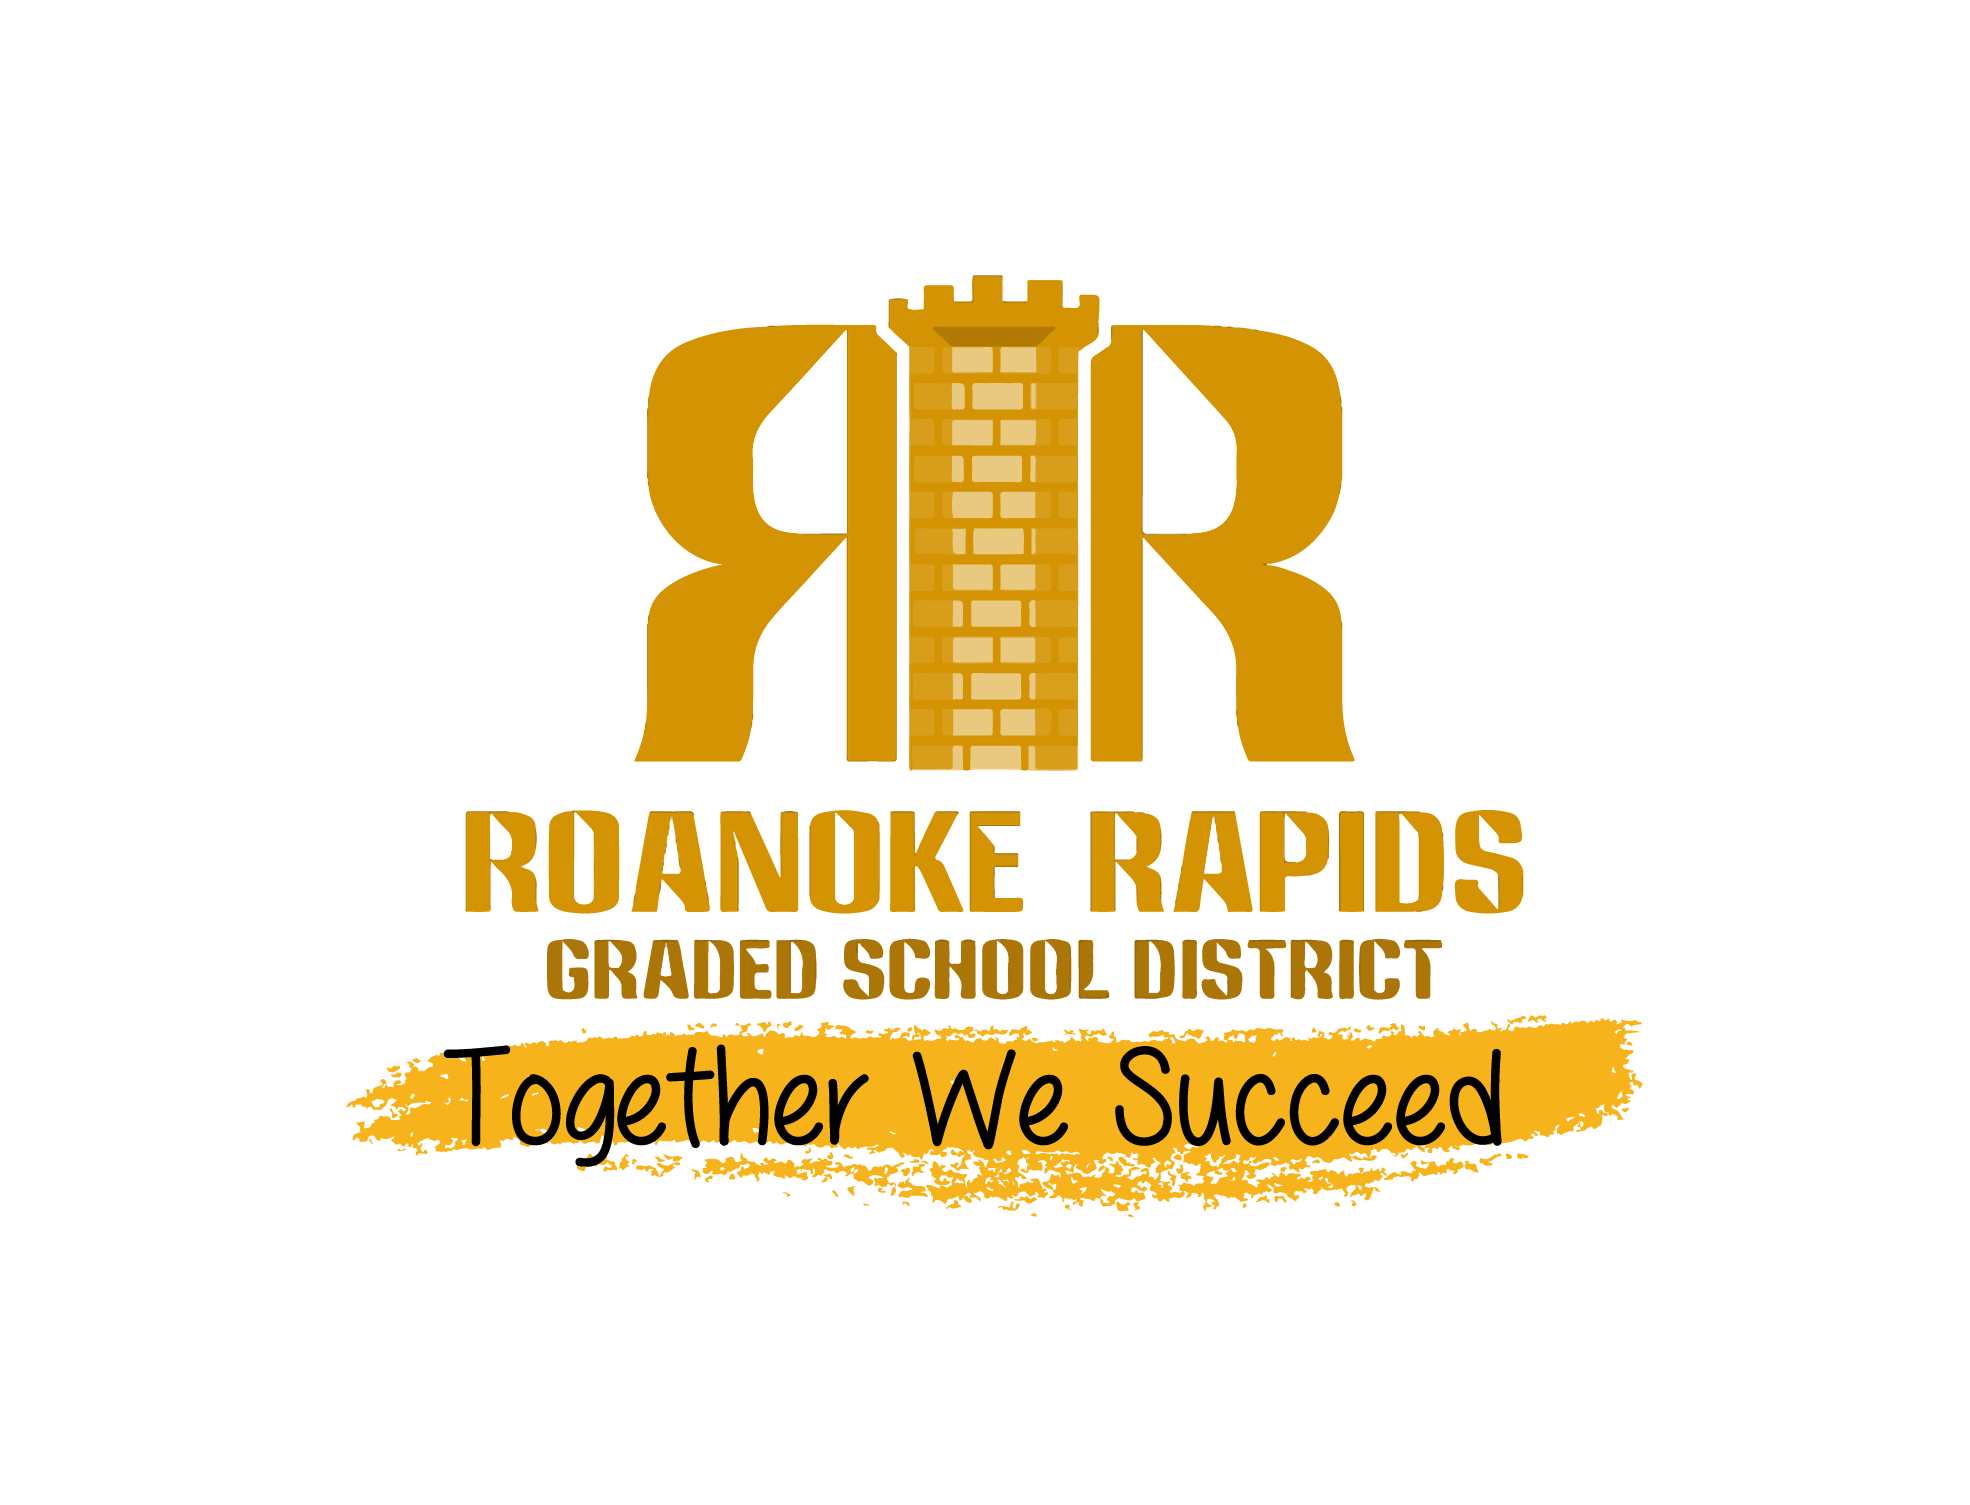 Roanoke Rapids Graded School District